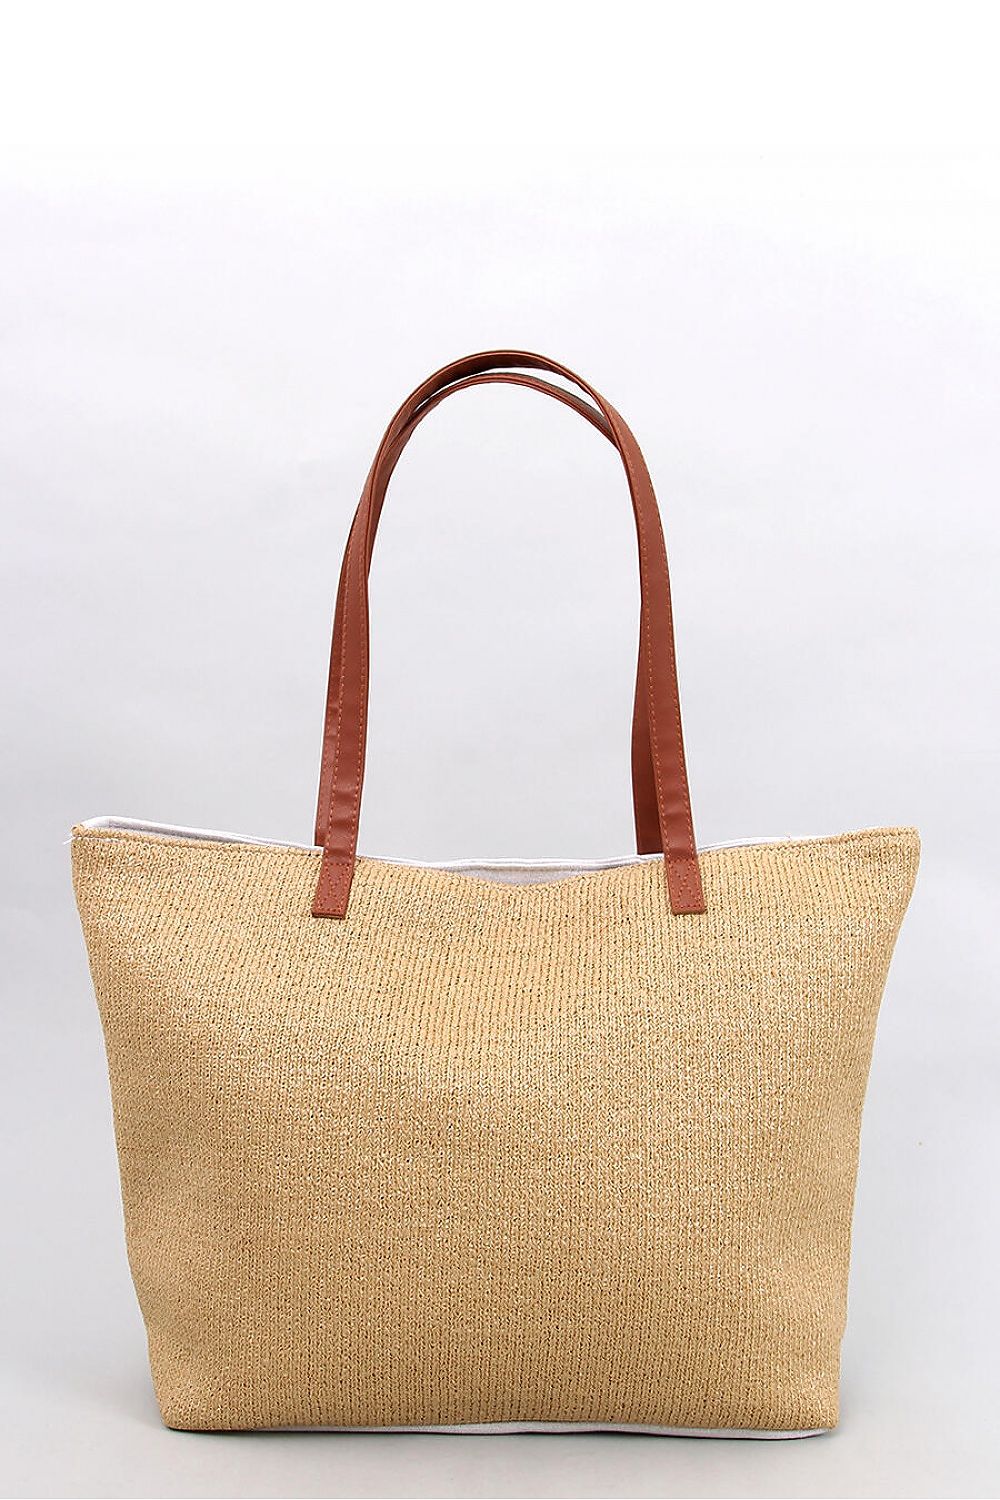 Tan and White Beach Bag by Inello